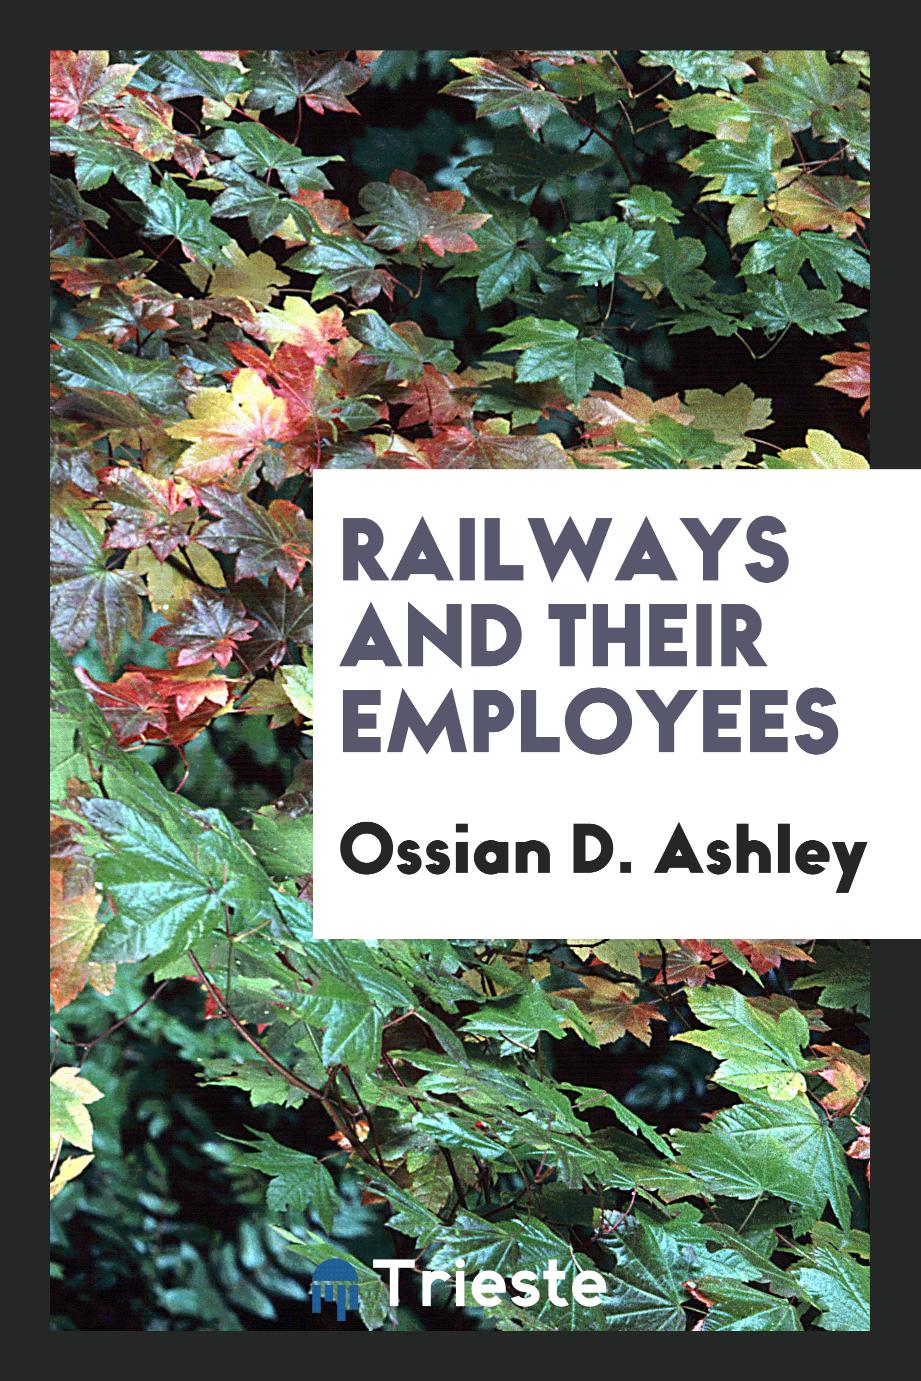 Railways and their employees